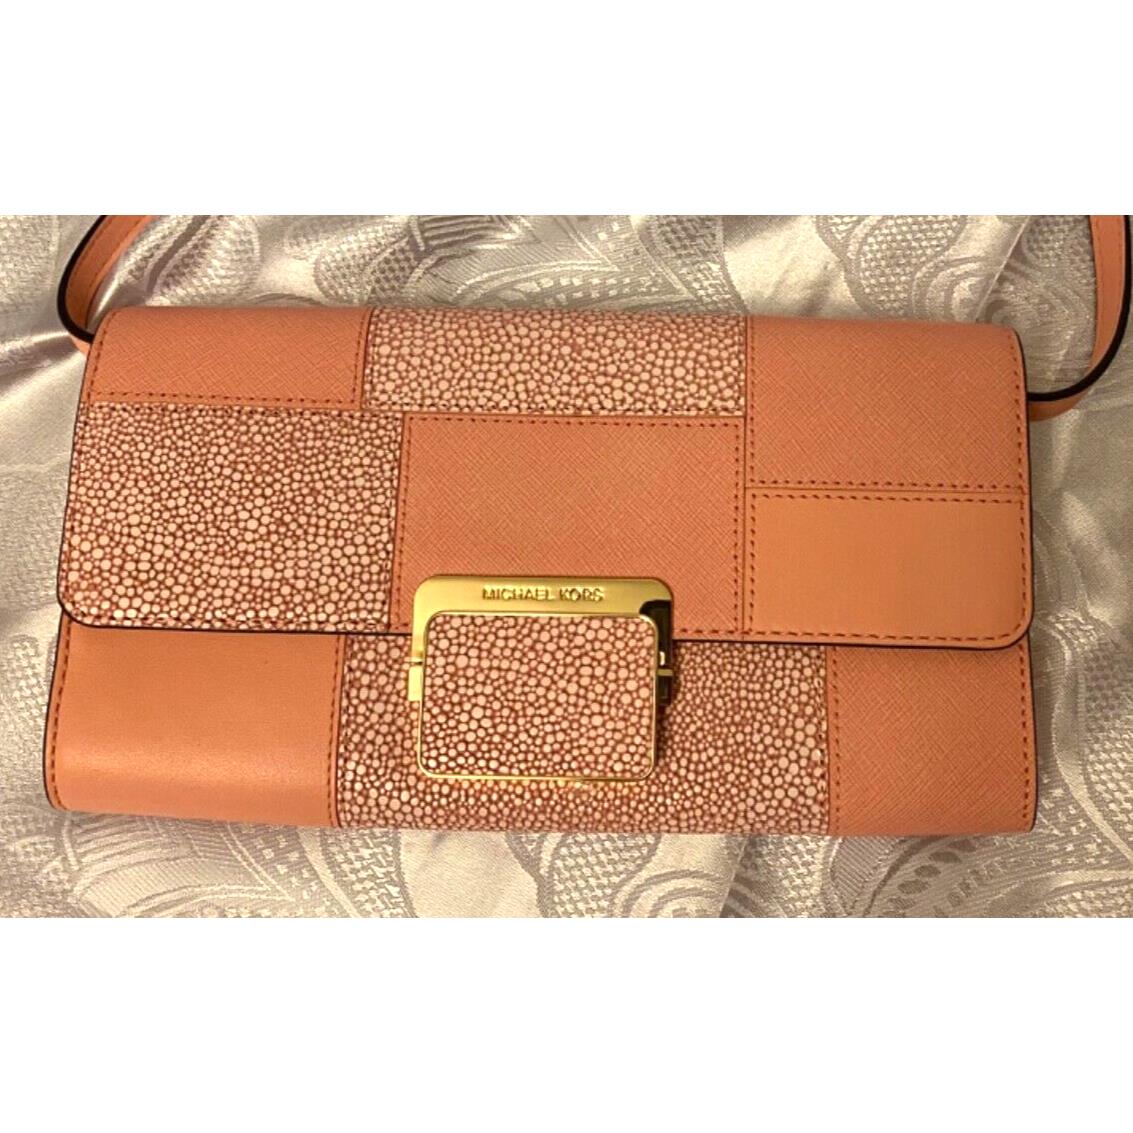 Michael Kors Cynthia Pale Pink LG Clutch Leather Handbag